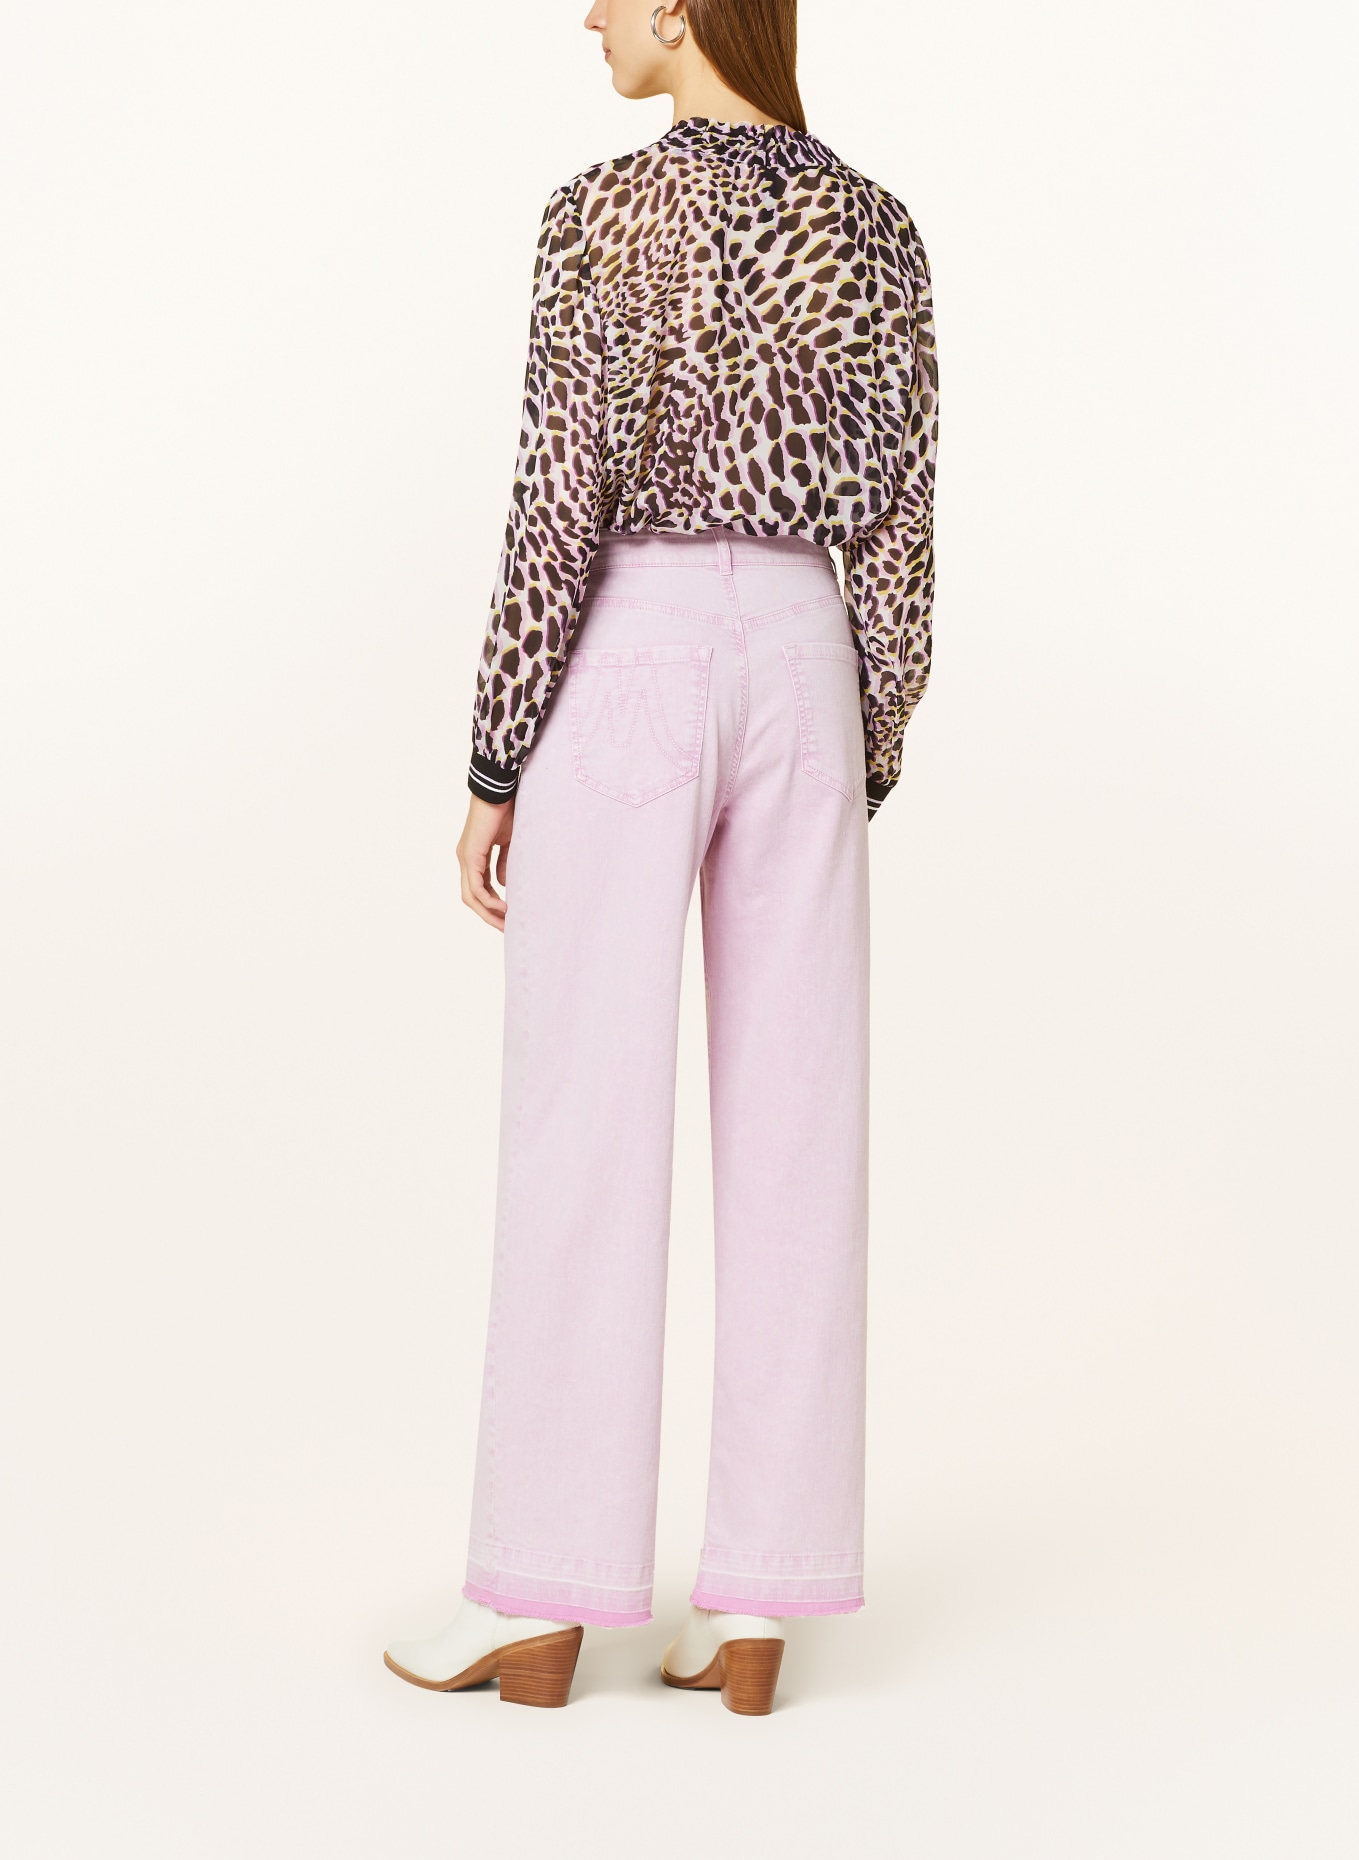 MARC CAIN Blusenshirt, Farbe: 708 bright pink lavender (Bild 3)